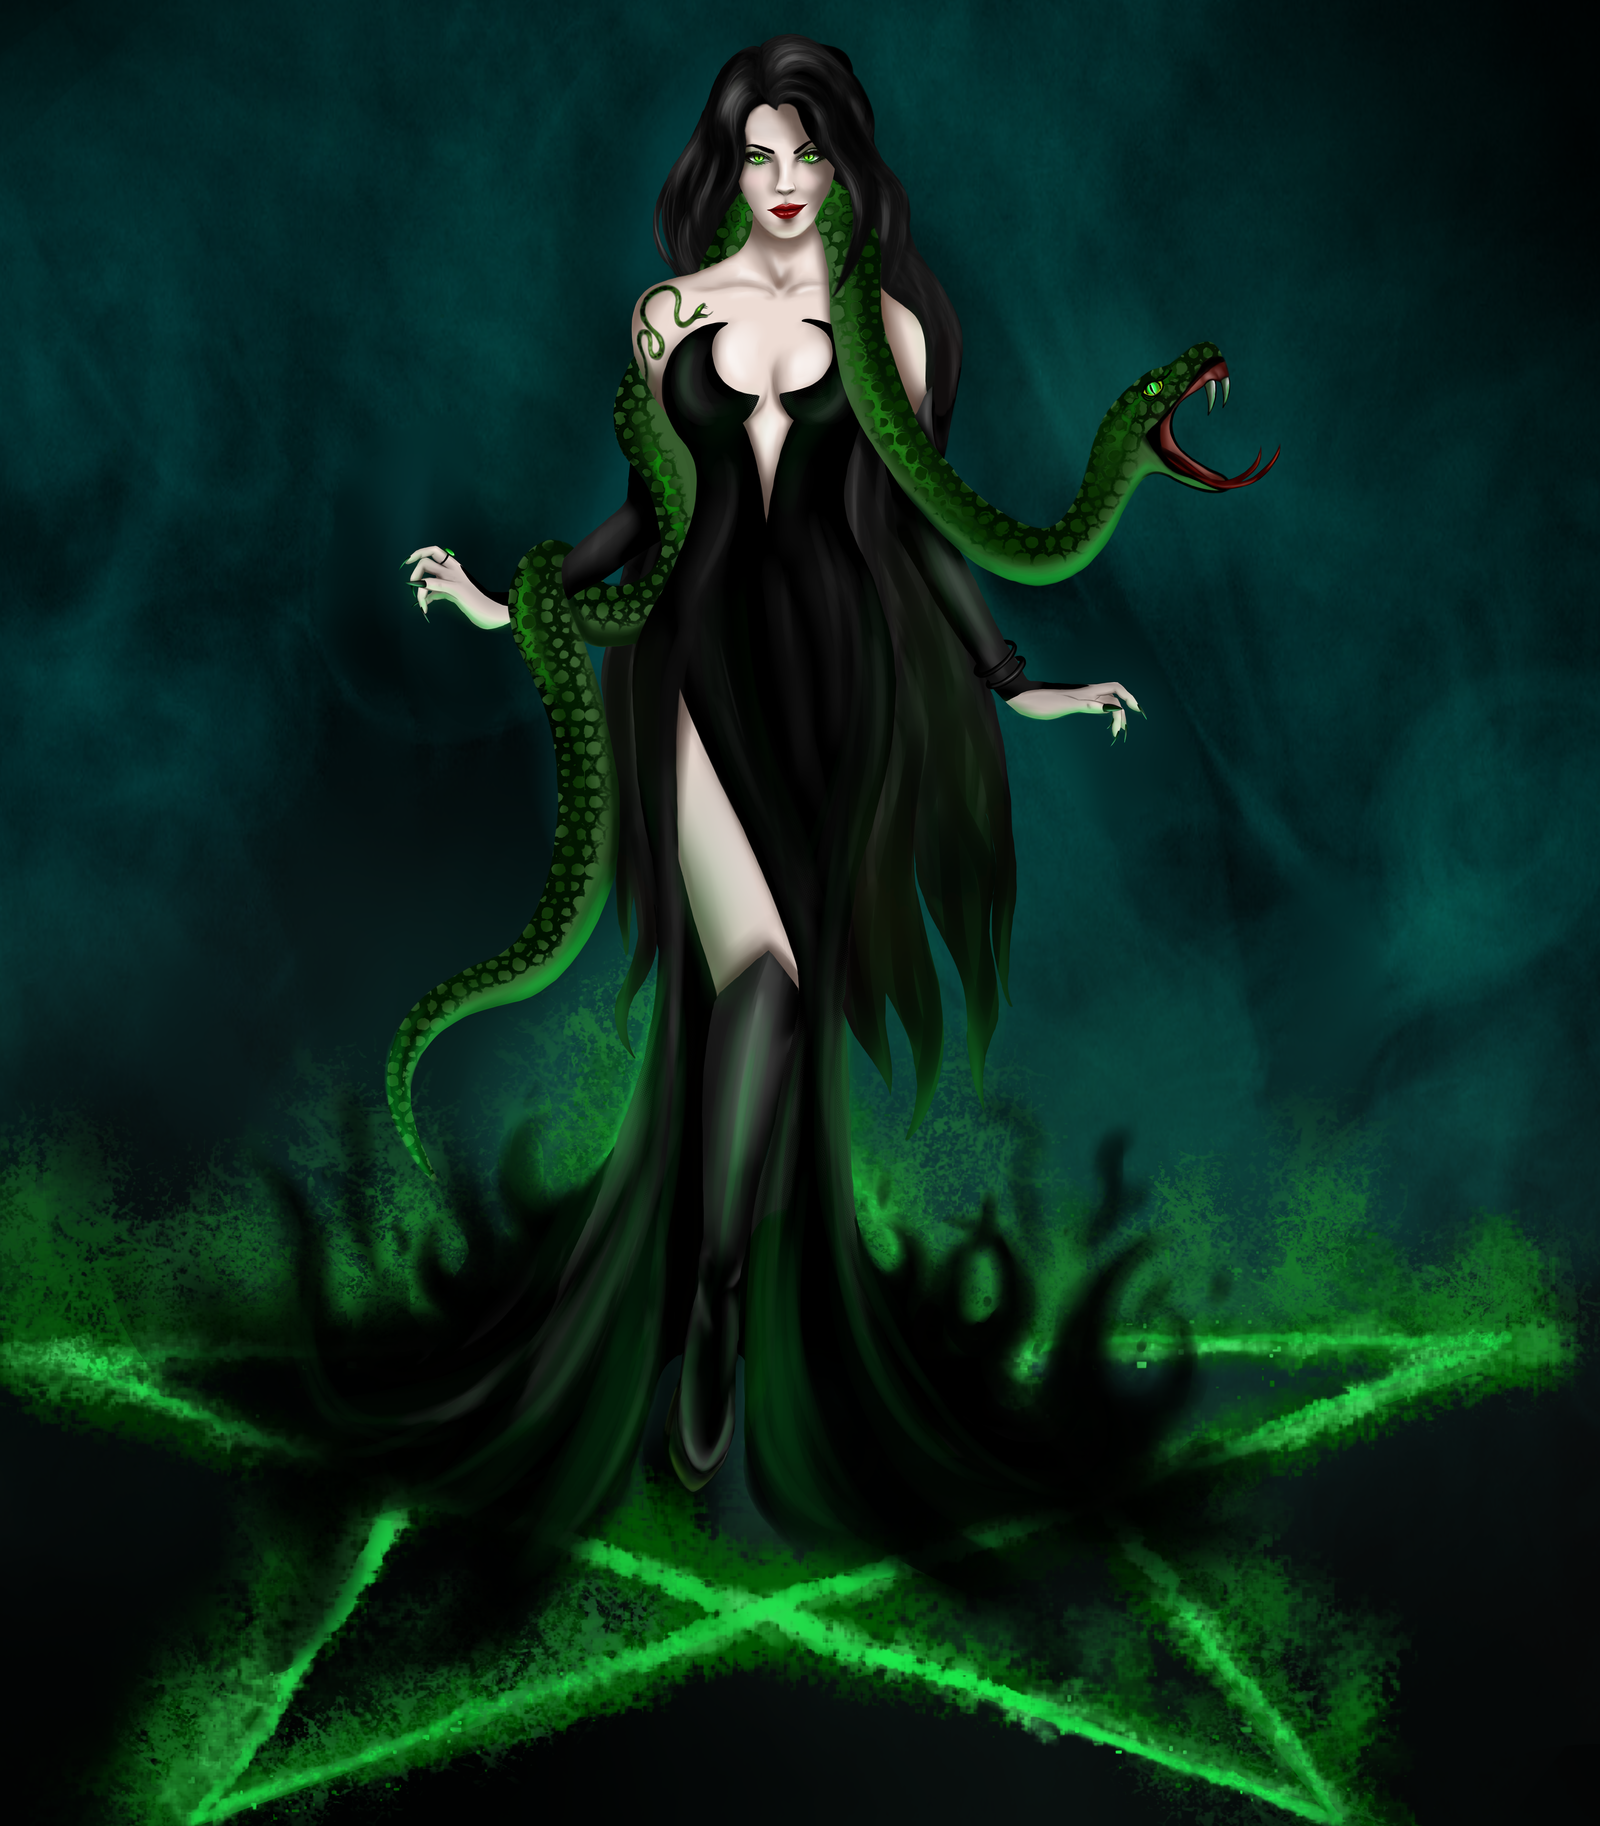 fanfic character - My, Art, Beautiful girl, Snake, Pentagram, Characters (edit), Demon